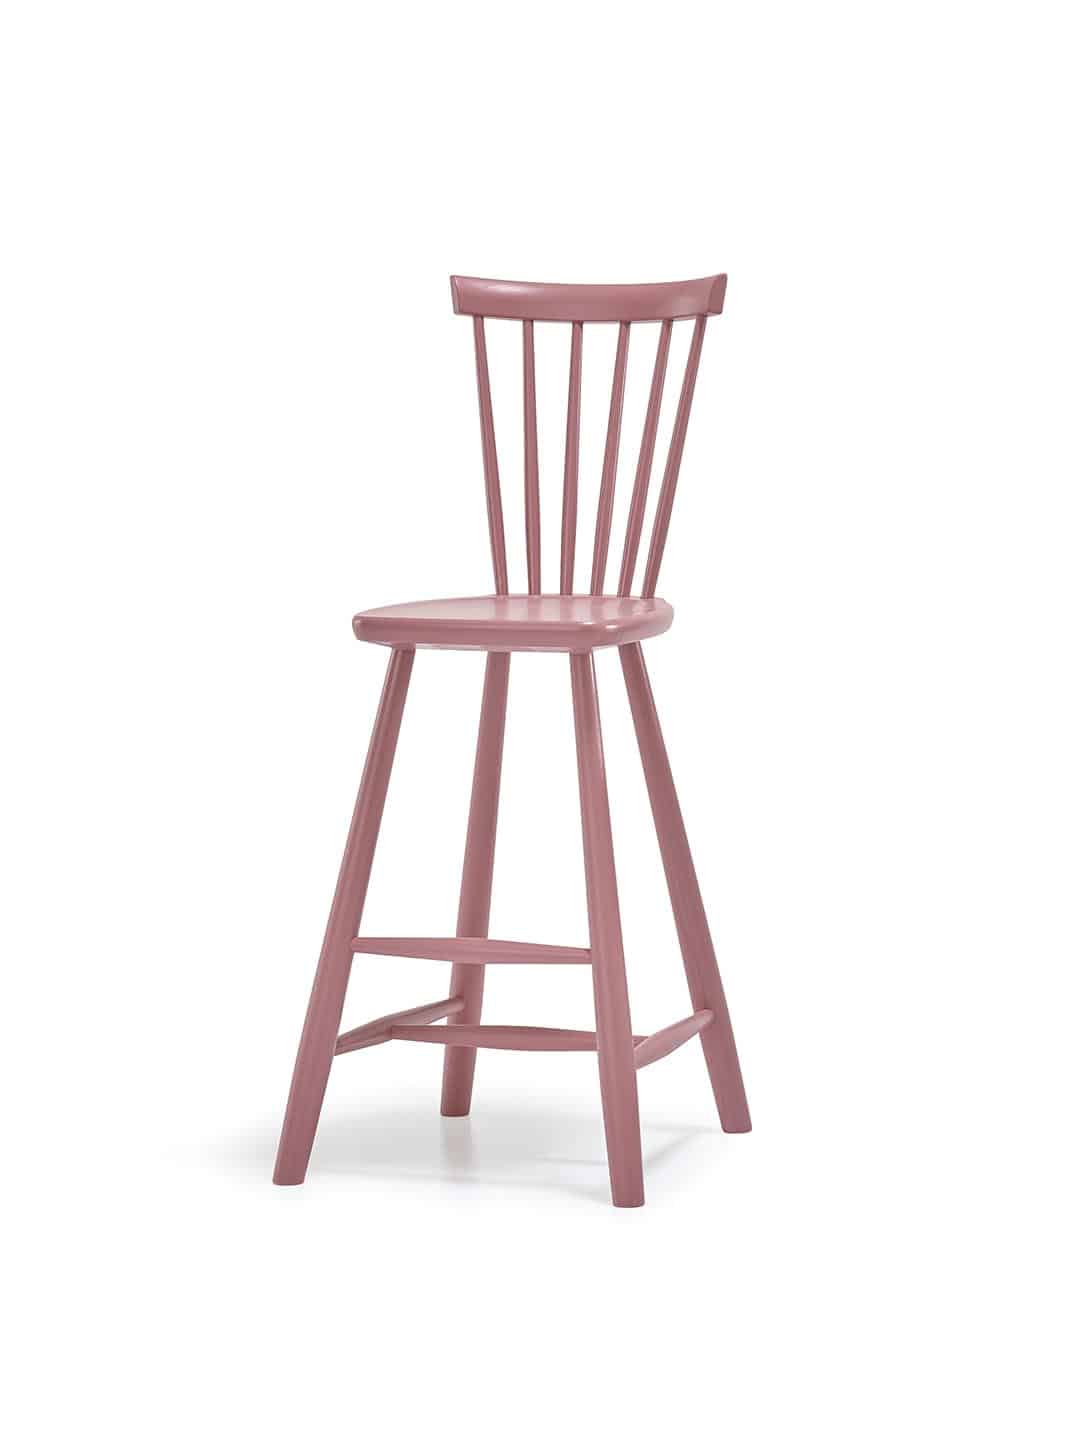 Детский стул Stolab Lilla Aland розового цвета